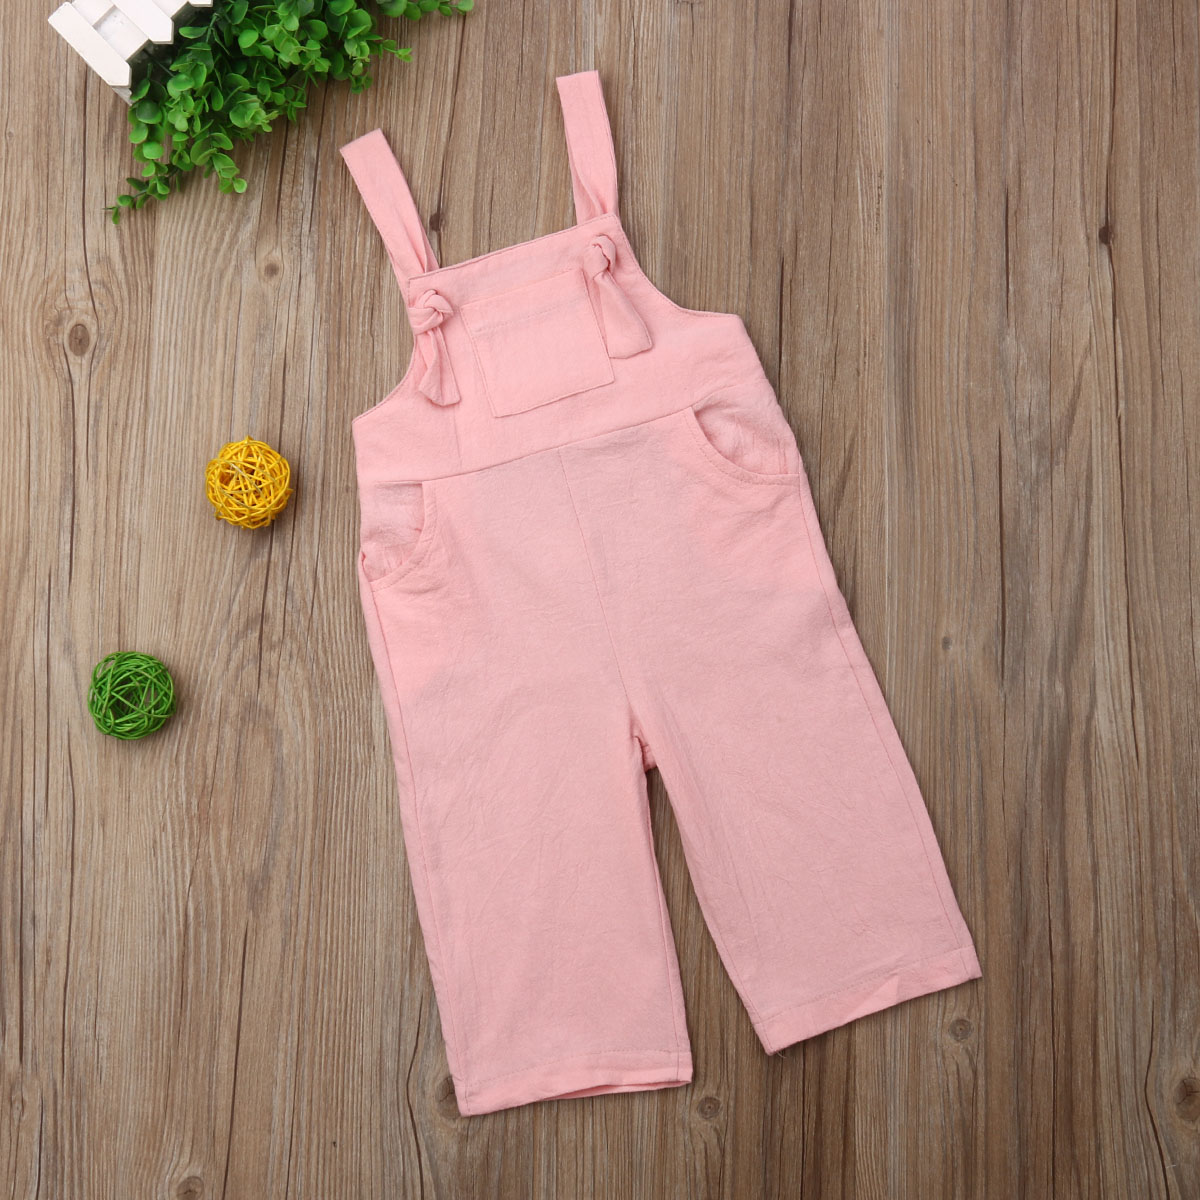 Toddler kid baby piger sommer overalls knude strappy ensfarvet linnebukser lange bukser tøj 1-6t